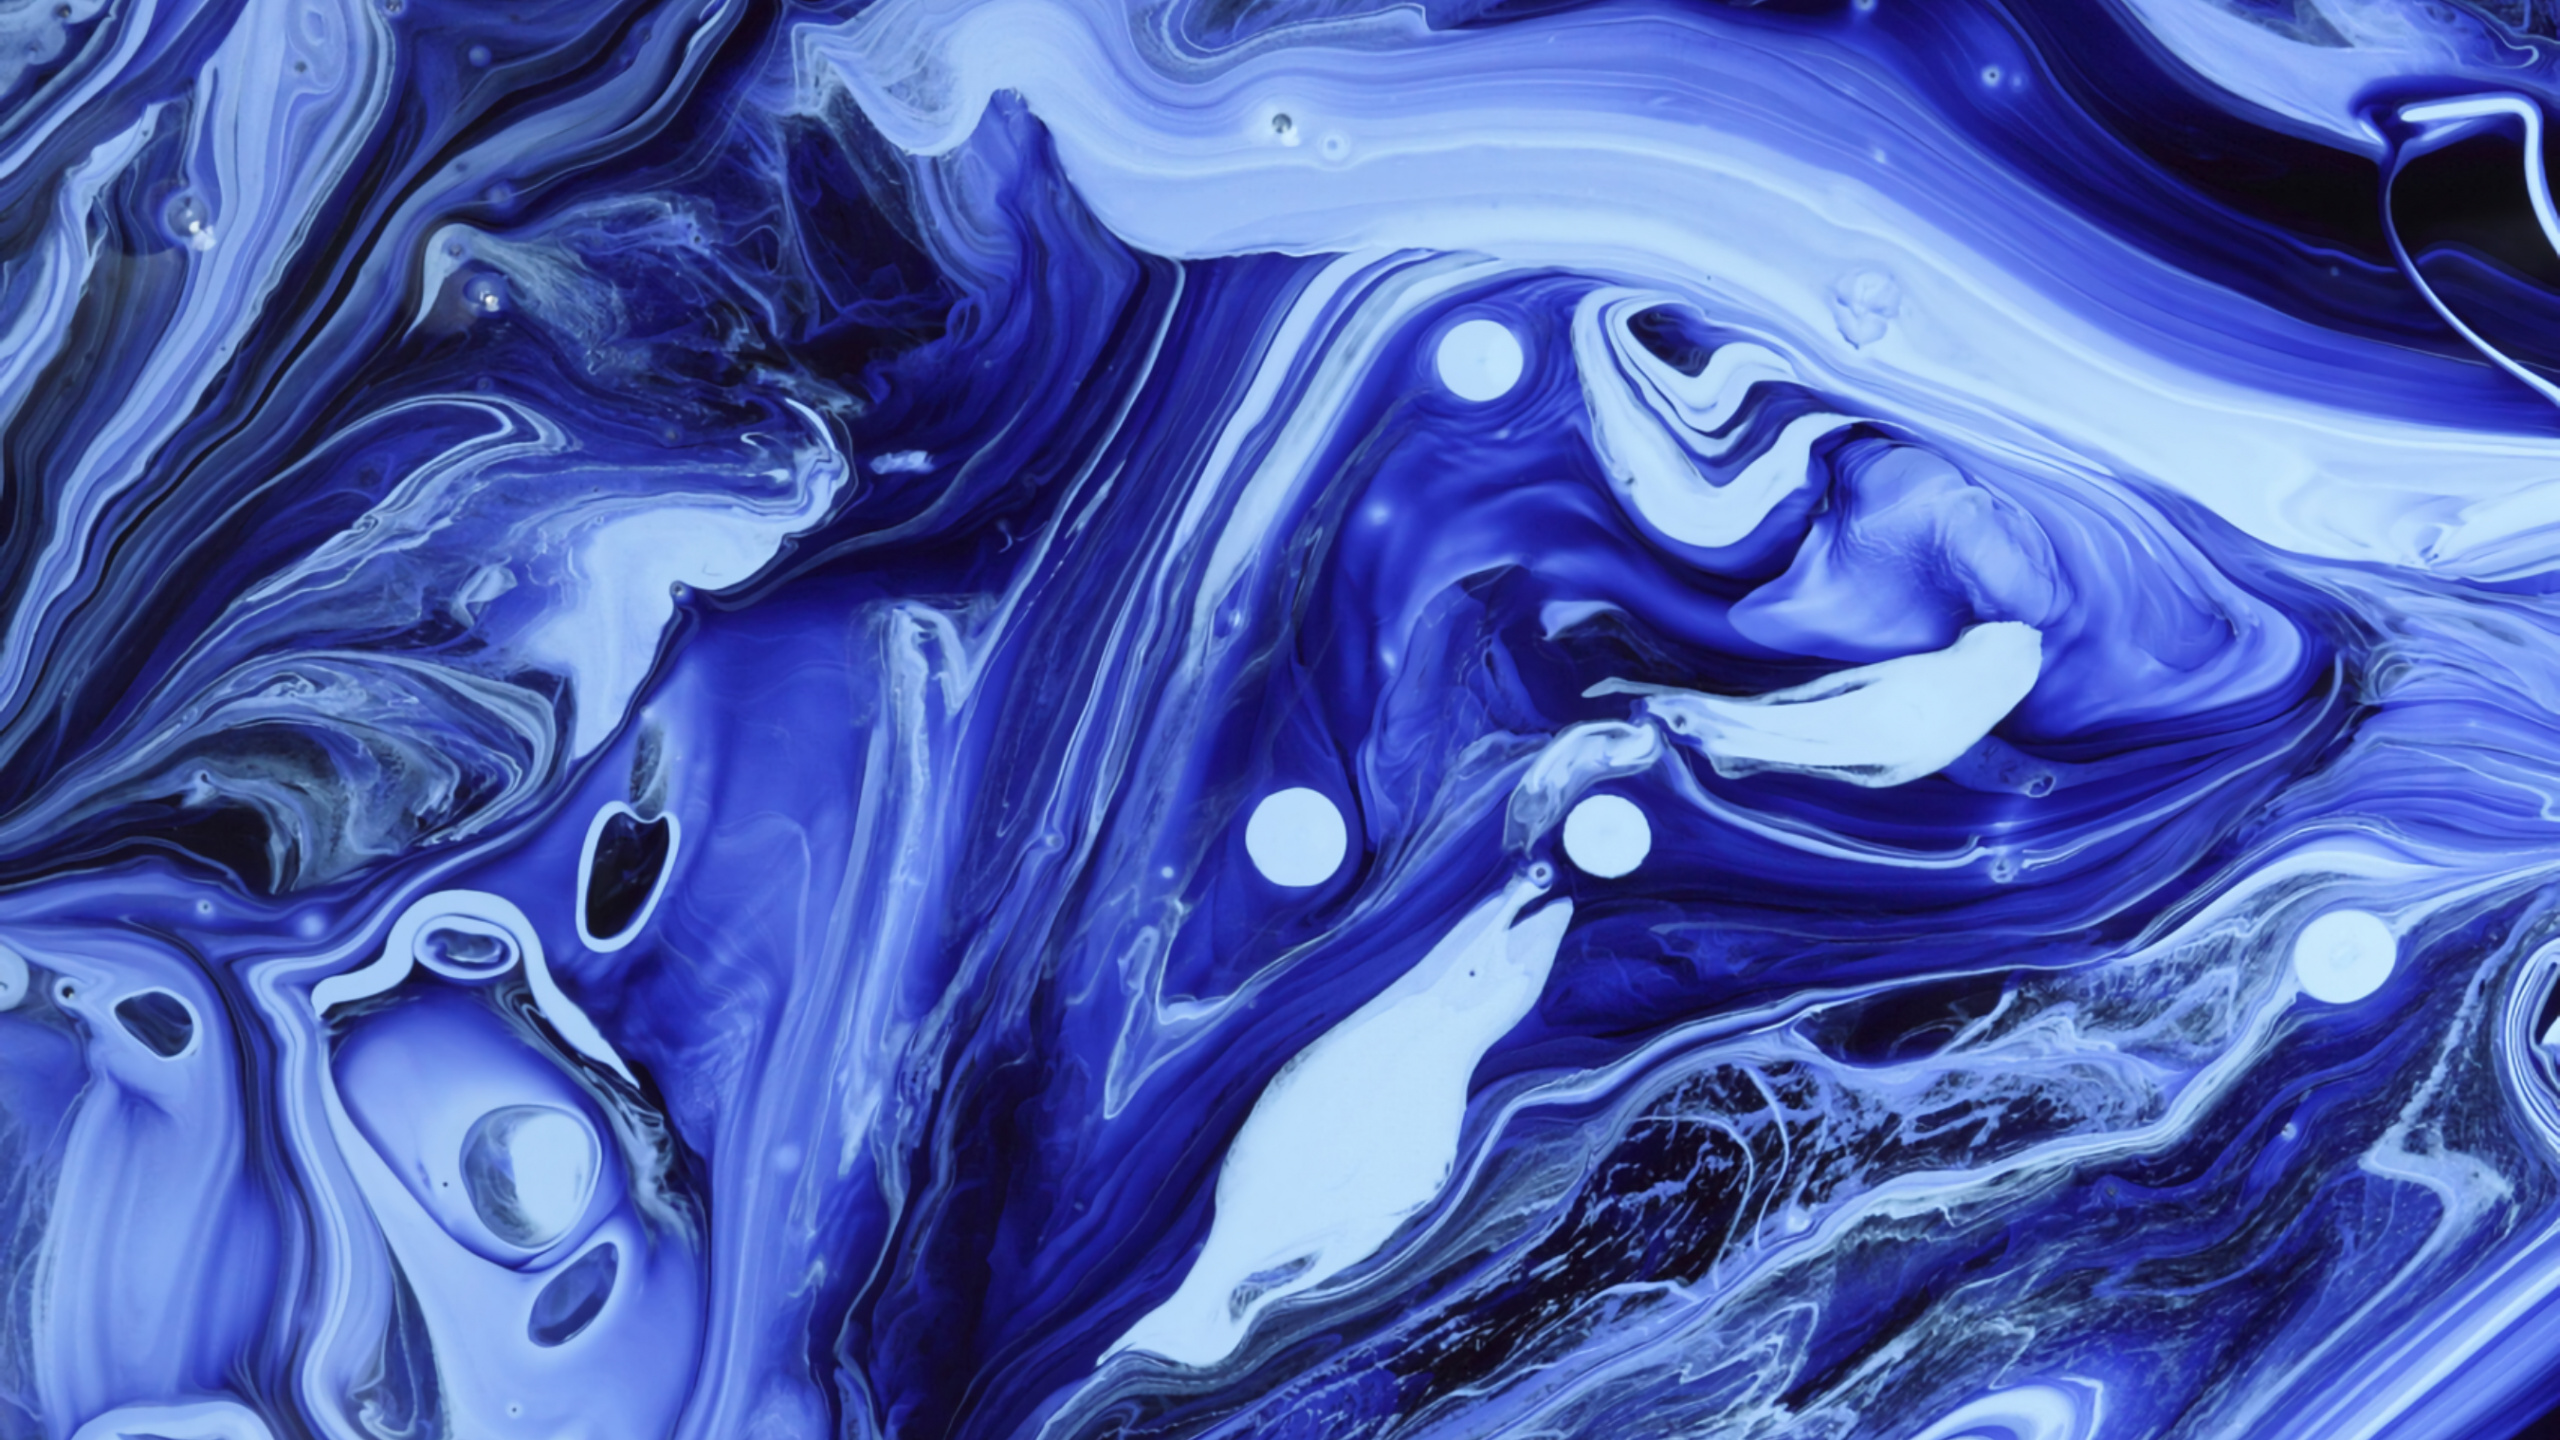 Water Drops on Blue Water. Wallpaper in 2560x1440 Resolution